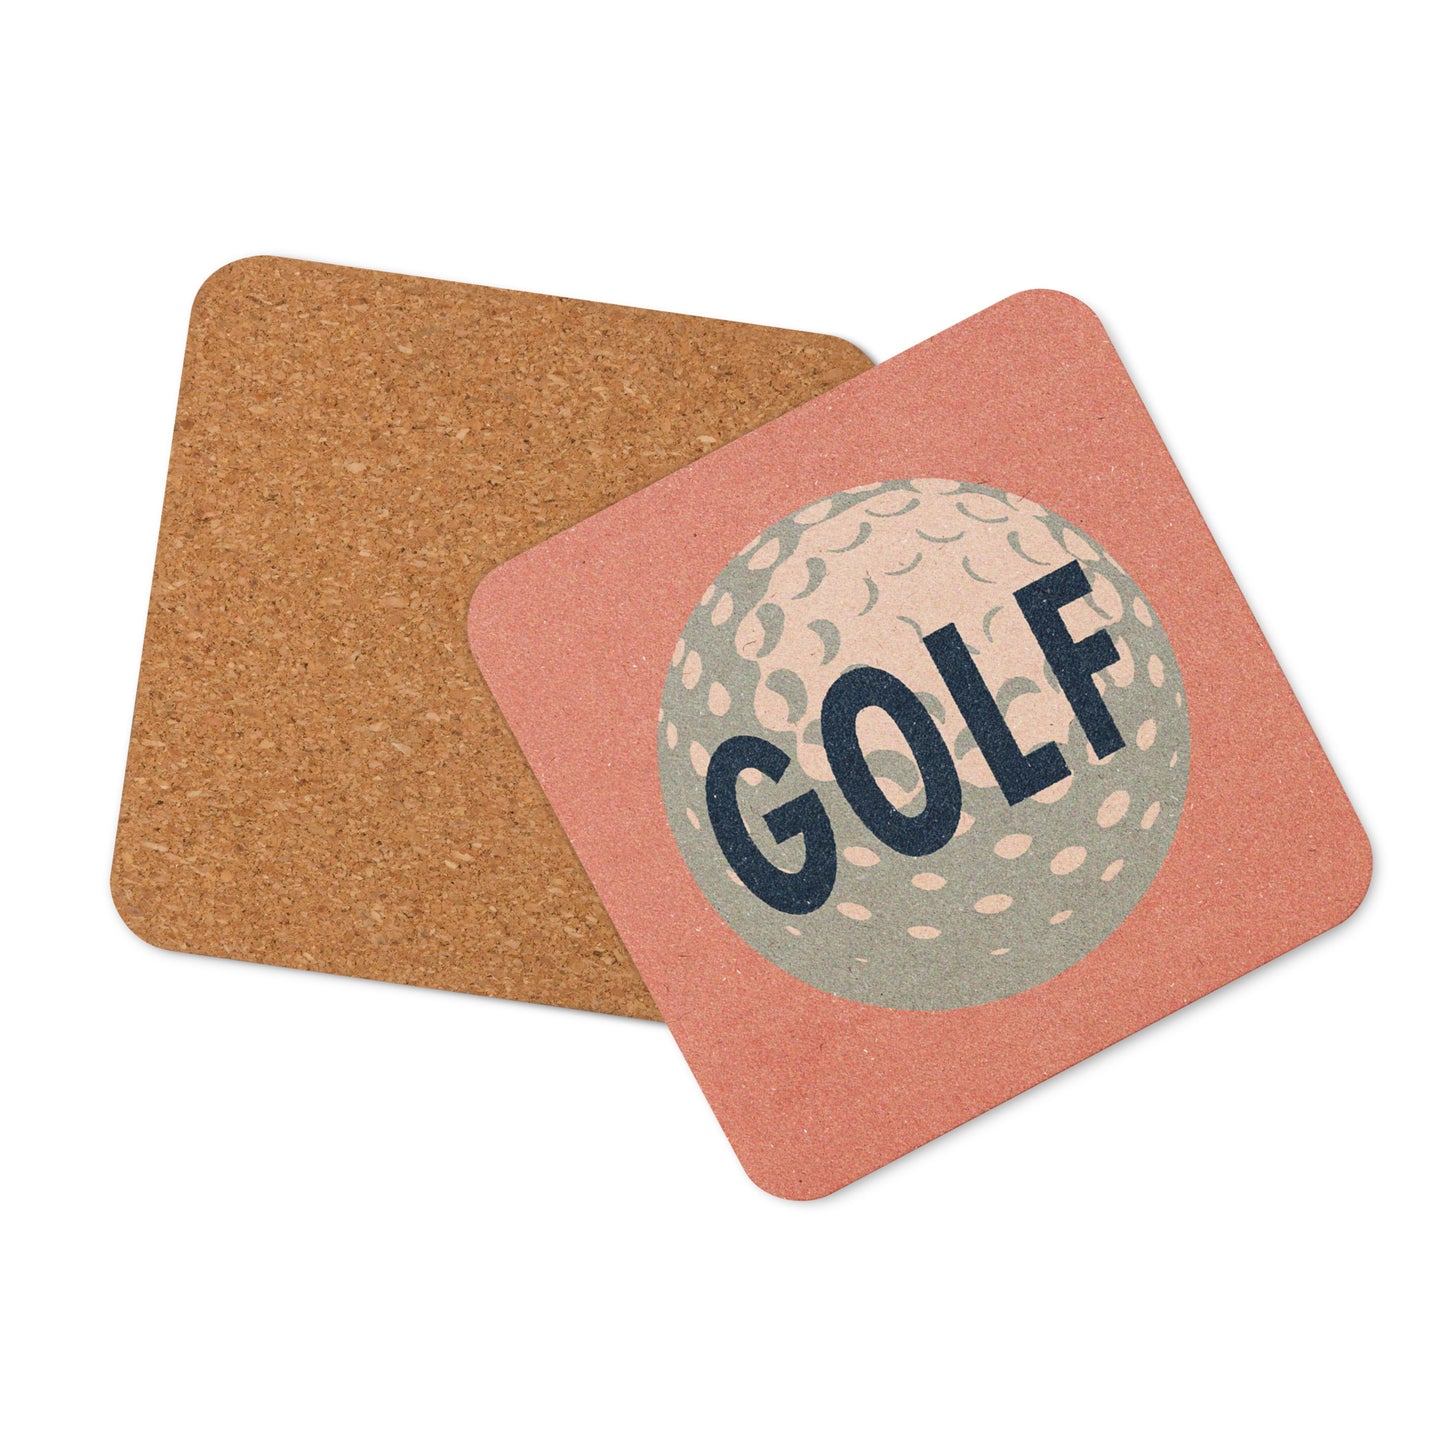 Golf Ball Drink Coaster Cork Back Square Coaster Salmon Pink